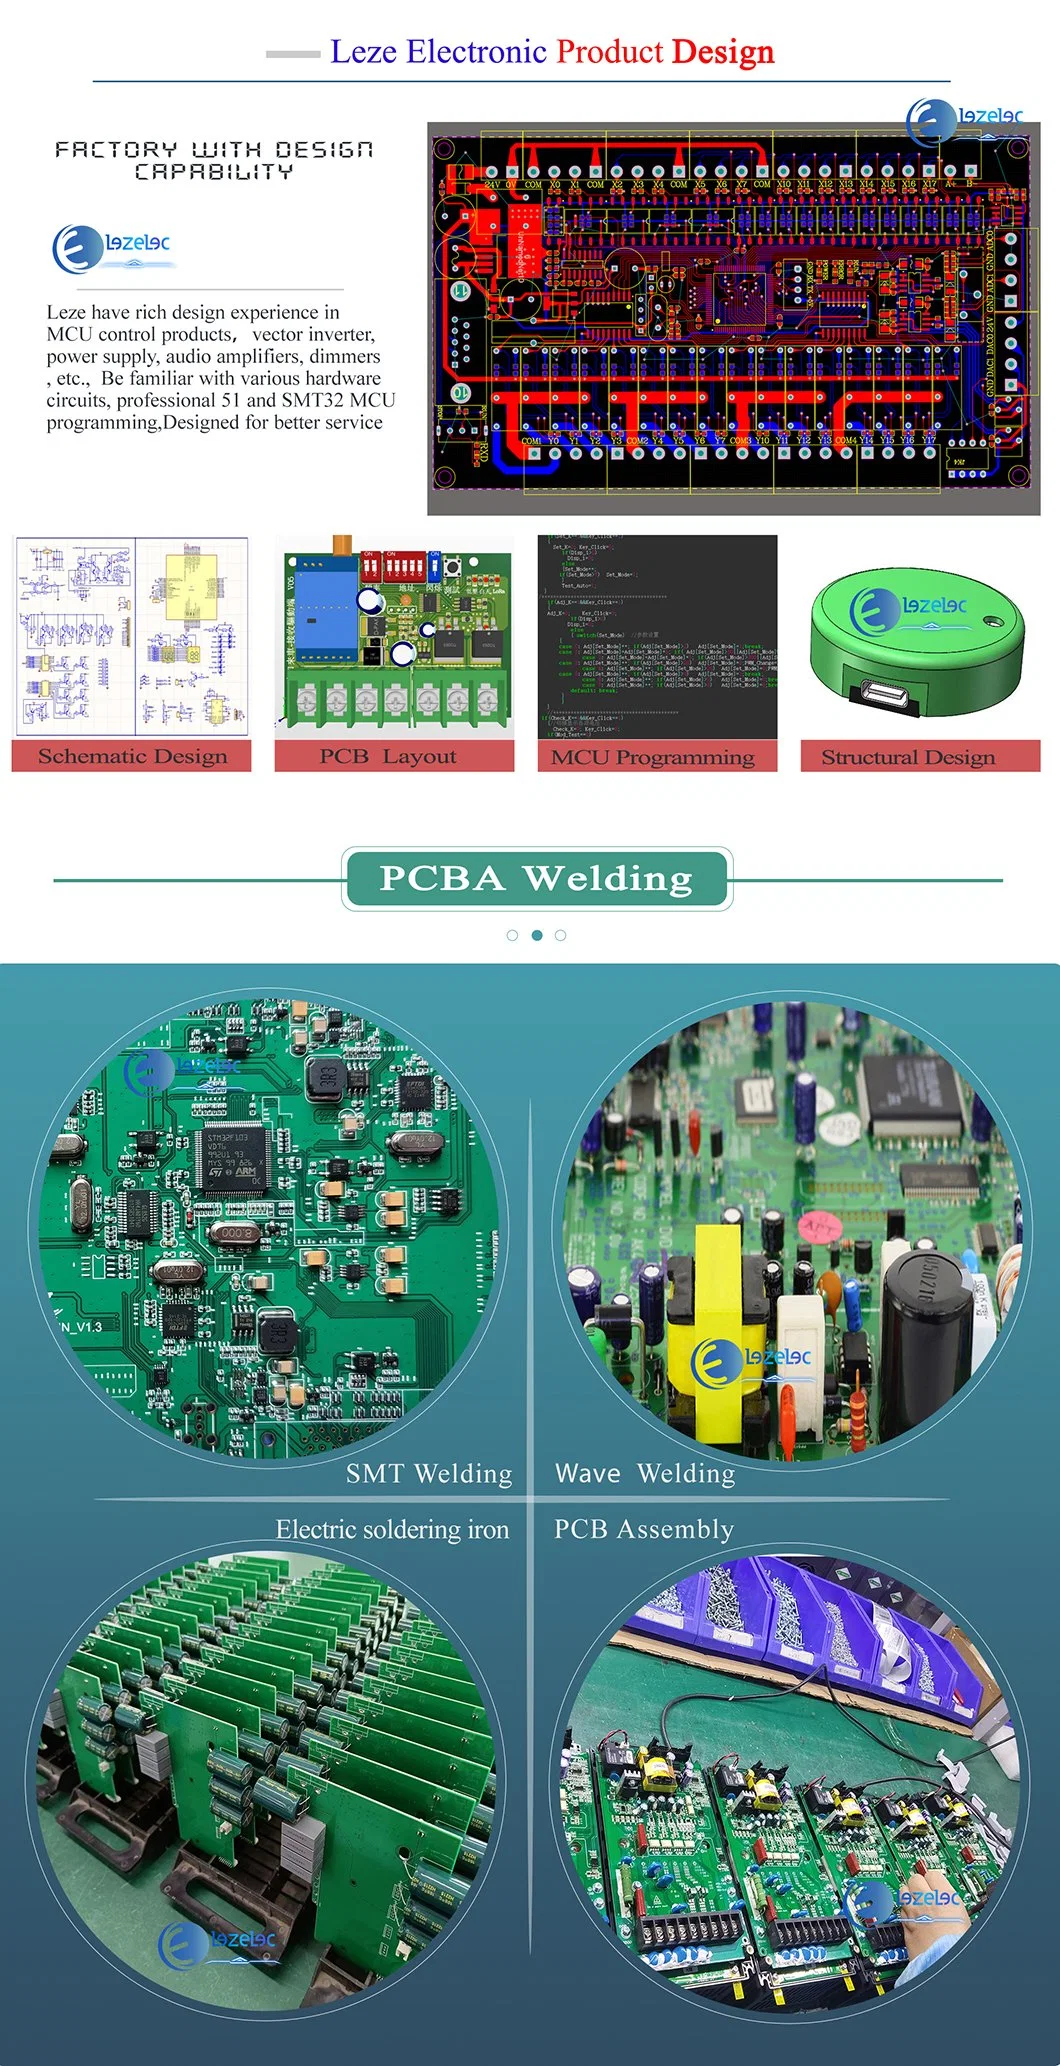 Design Schematic PCB Layout MCU Programming Structural Design Aoi /PCBA Testing